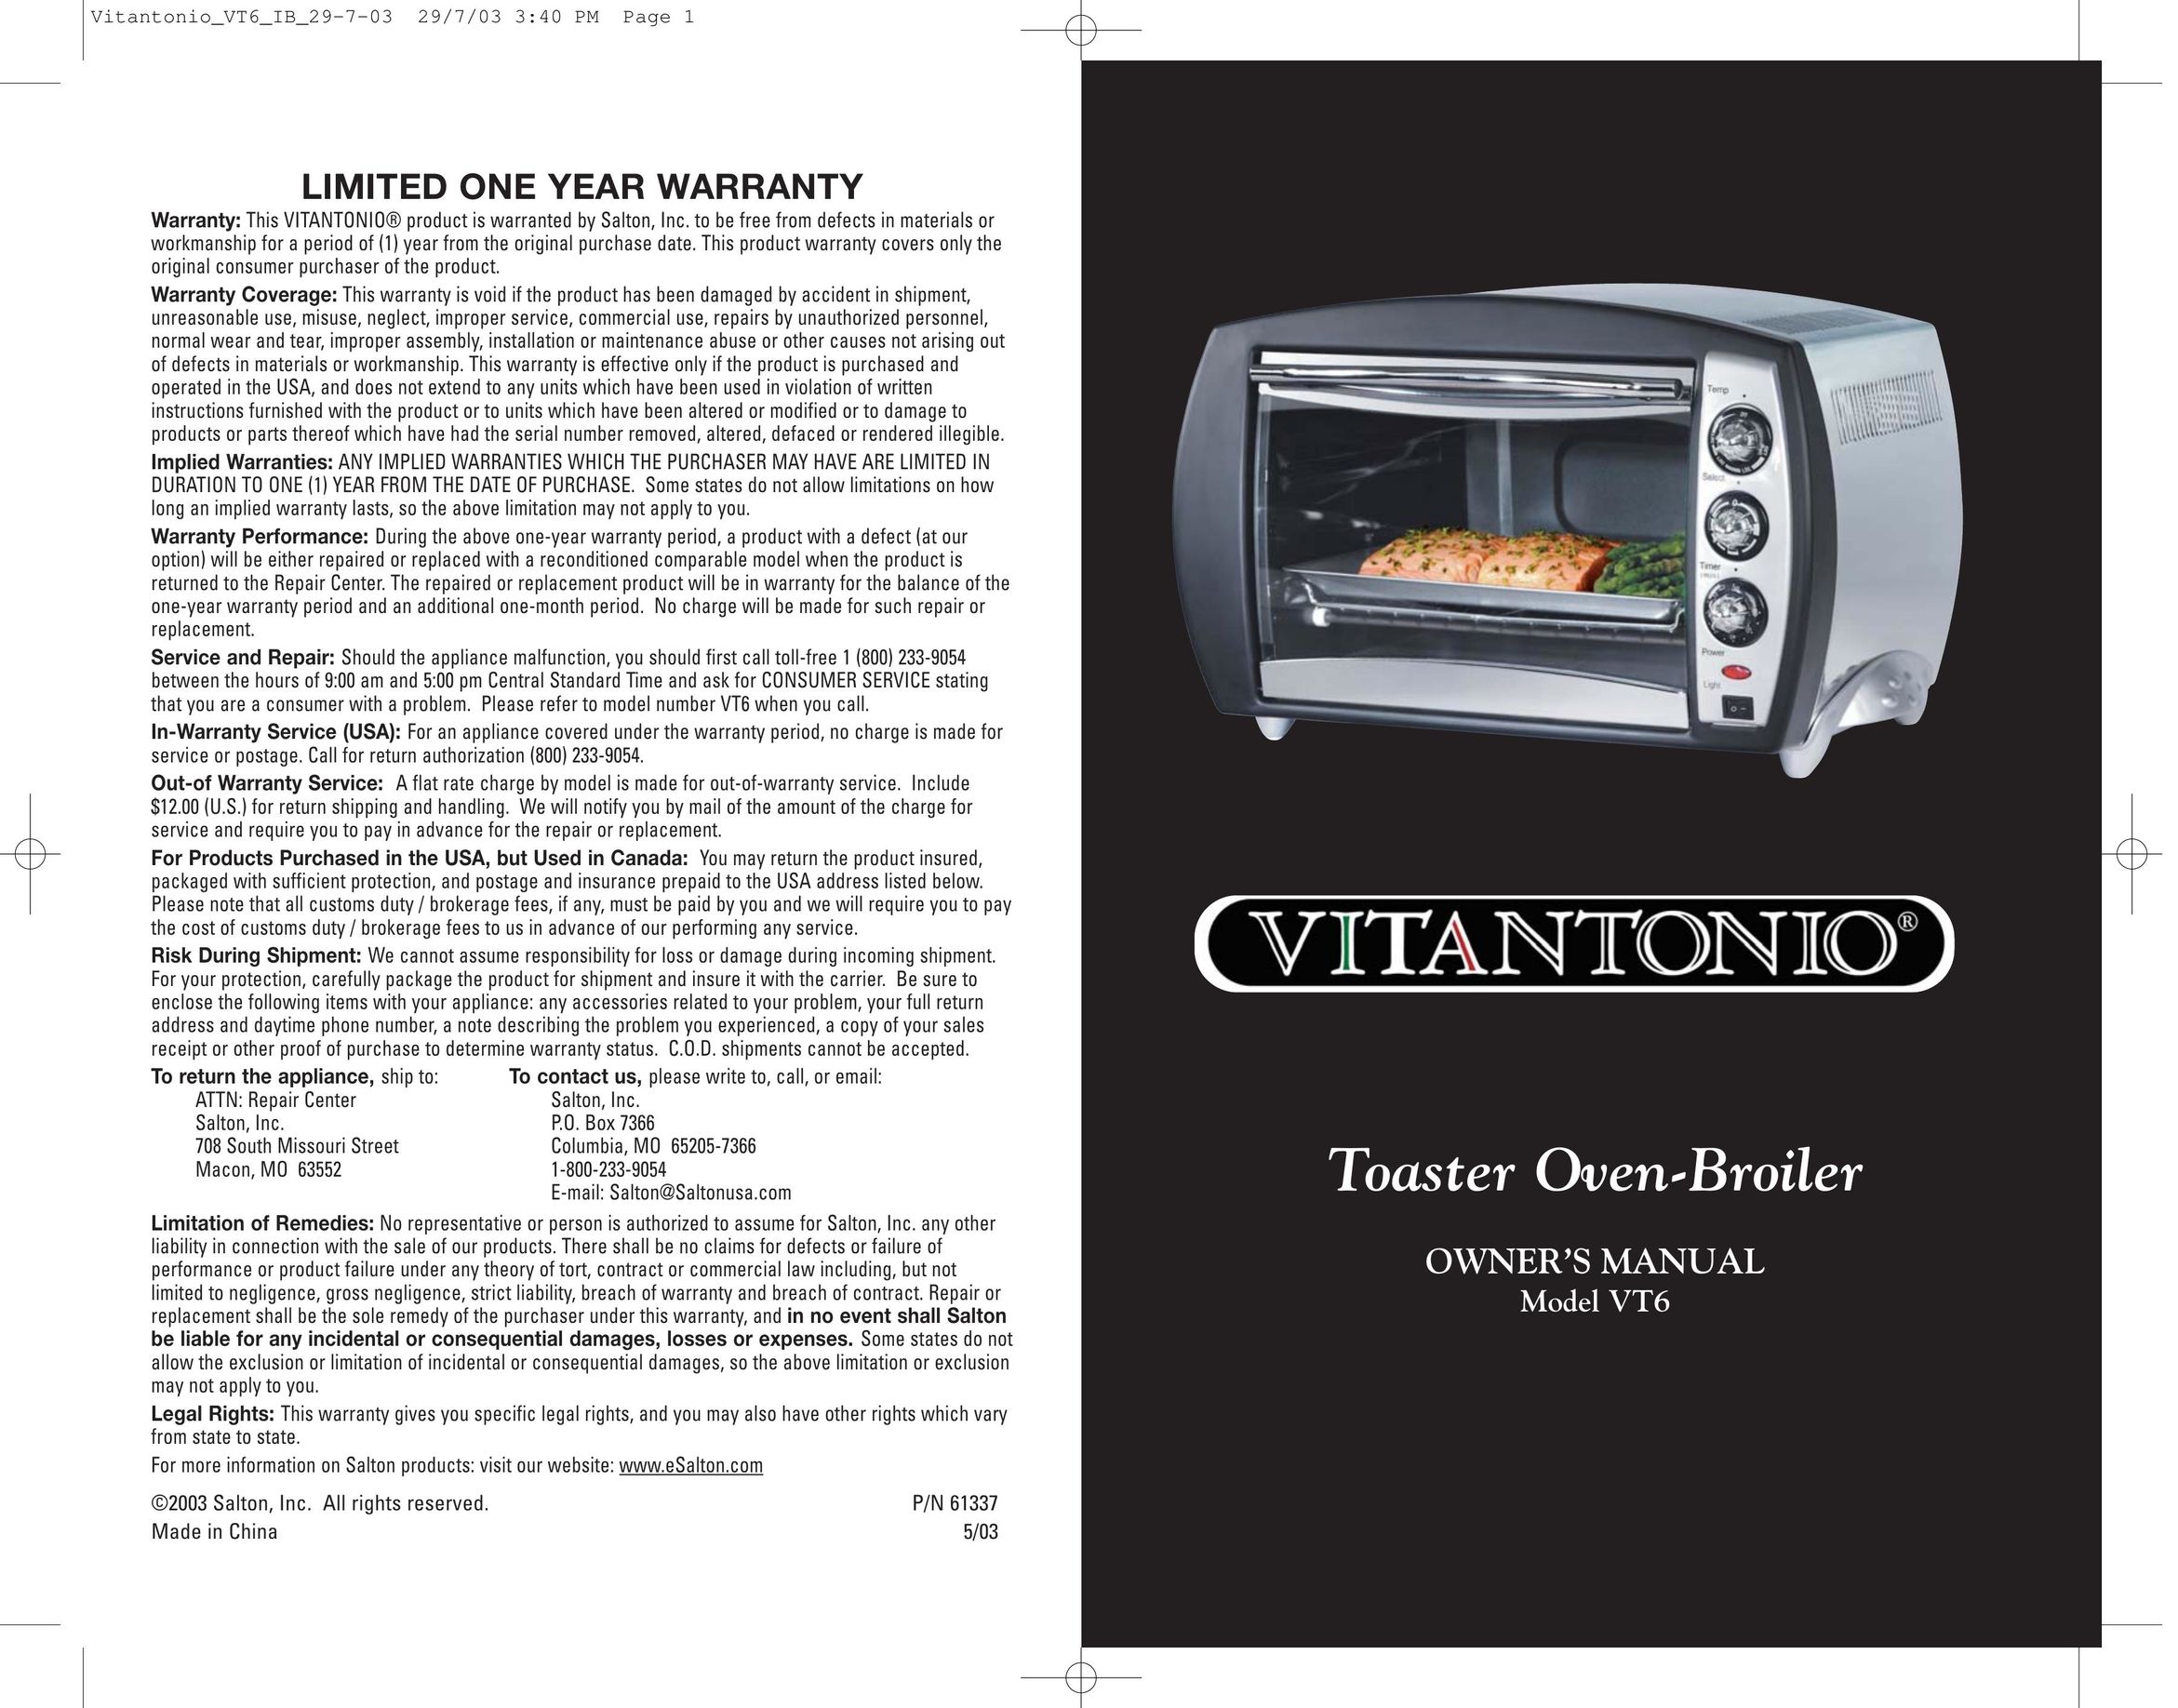 Trattorina VT6 Oven User Manual